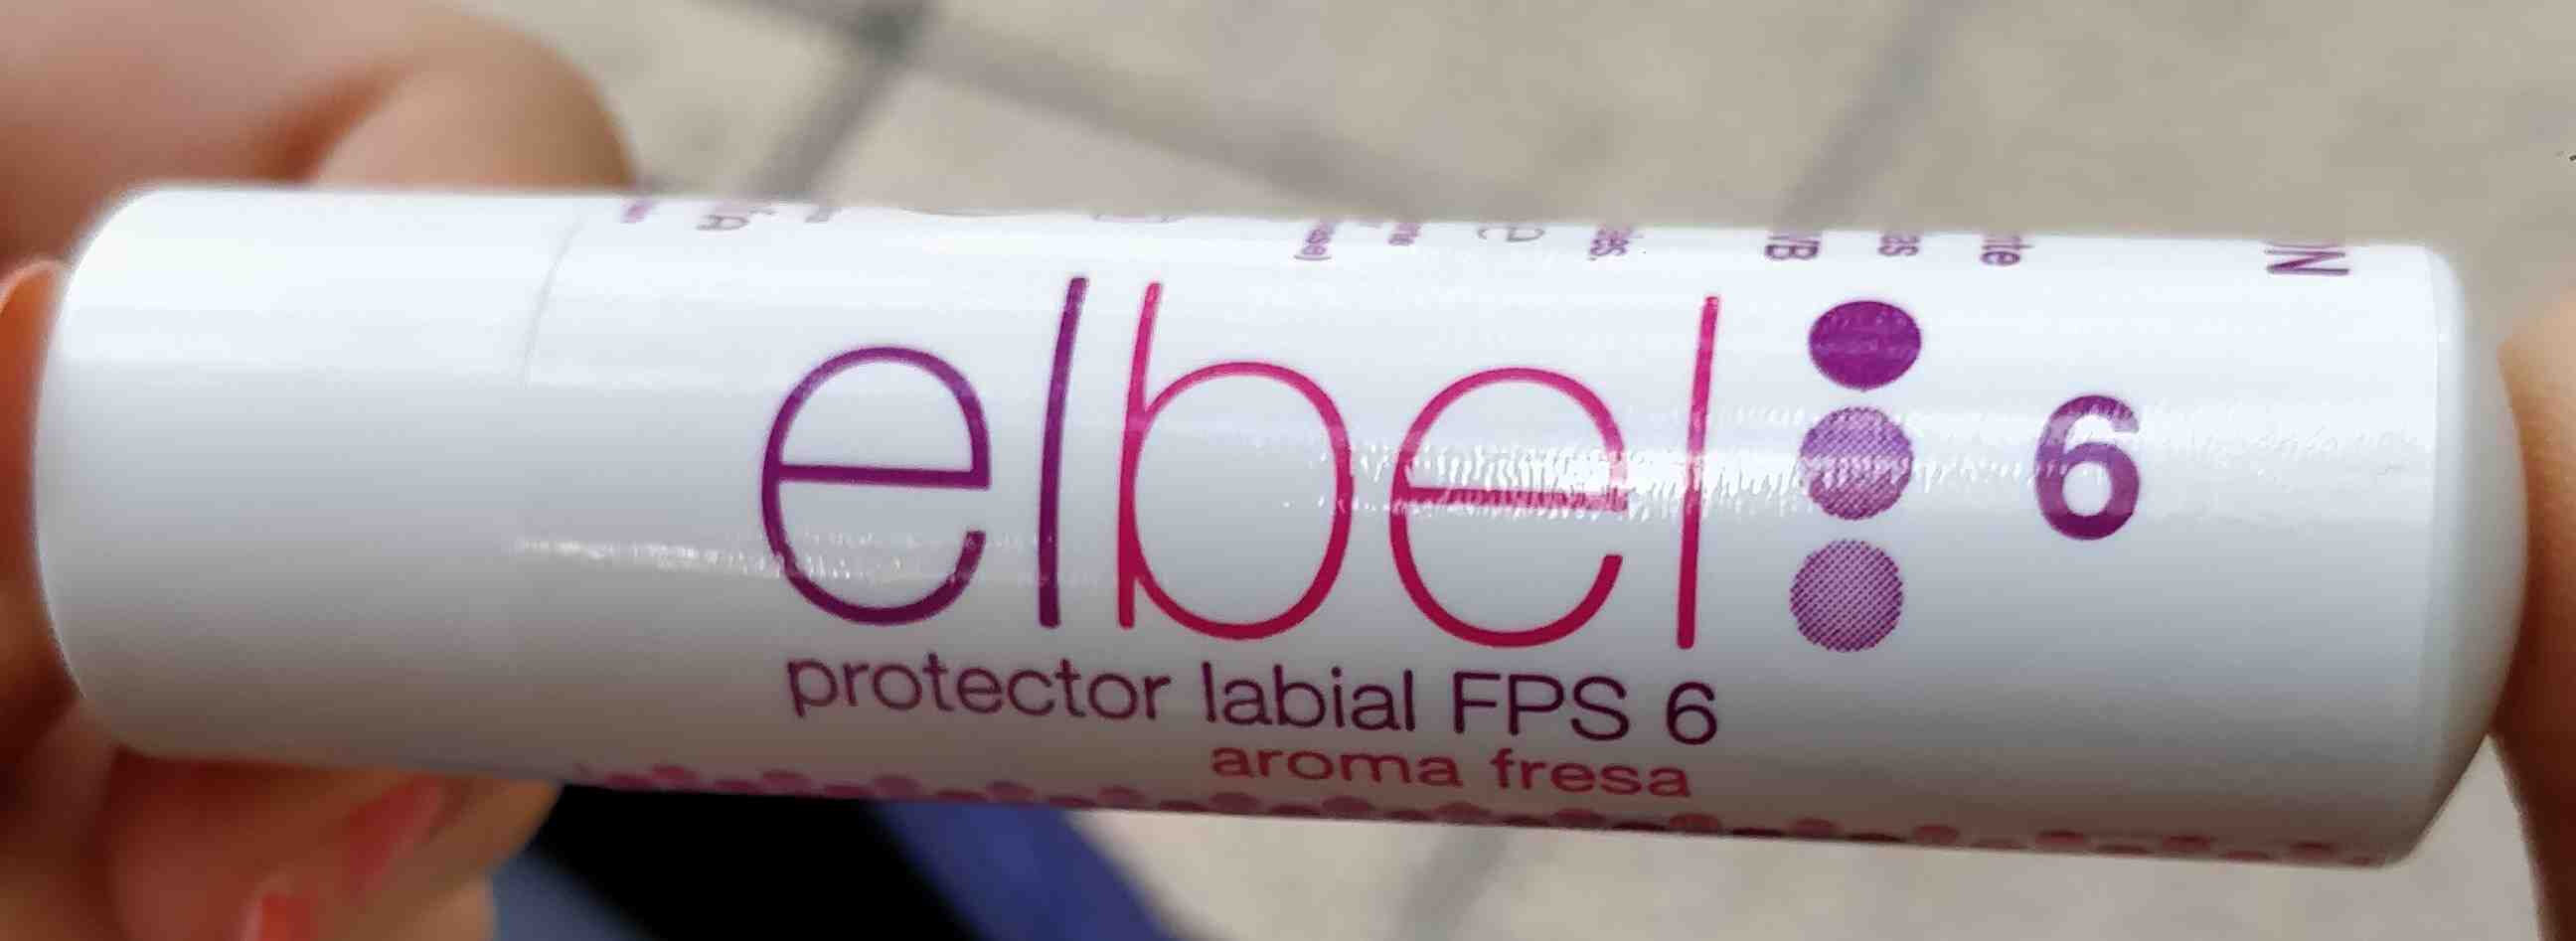 Protector labial FPS 6 aroma fresa - Produktua - en